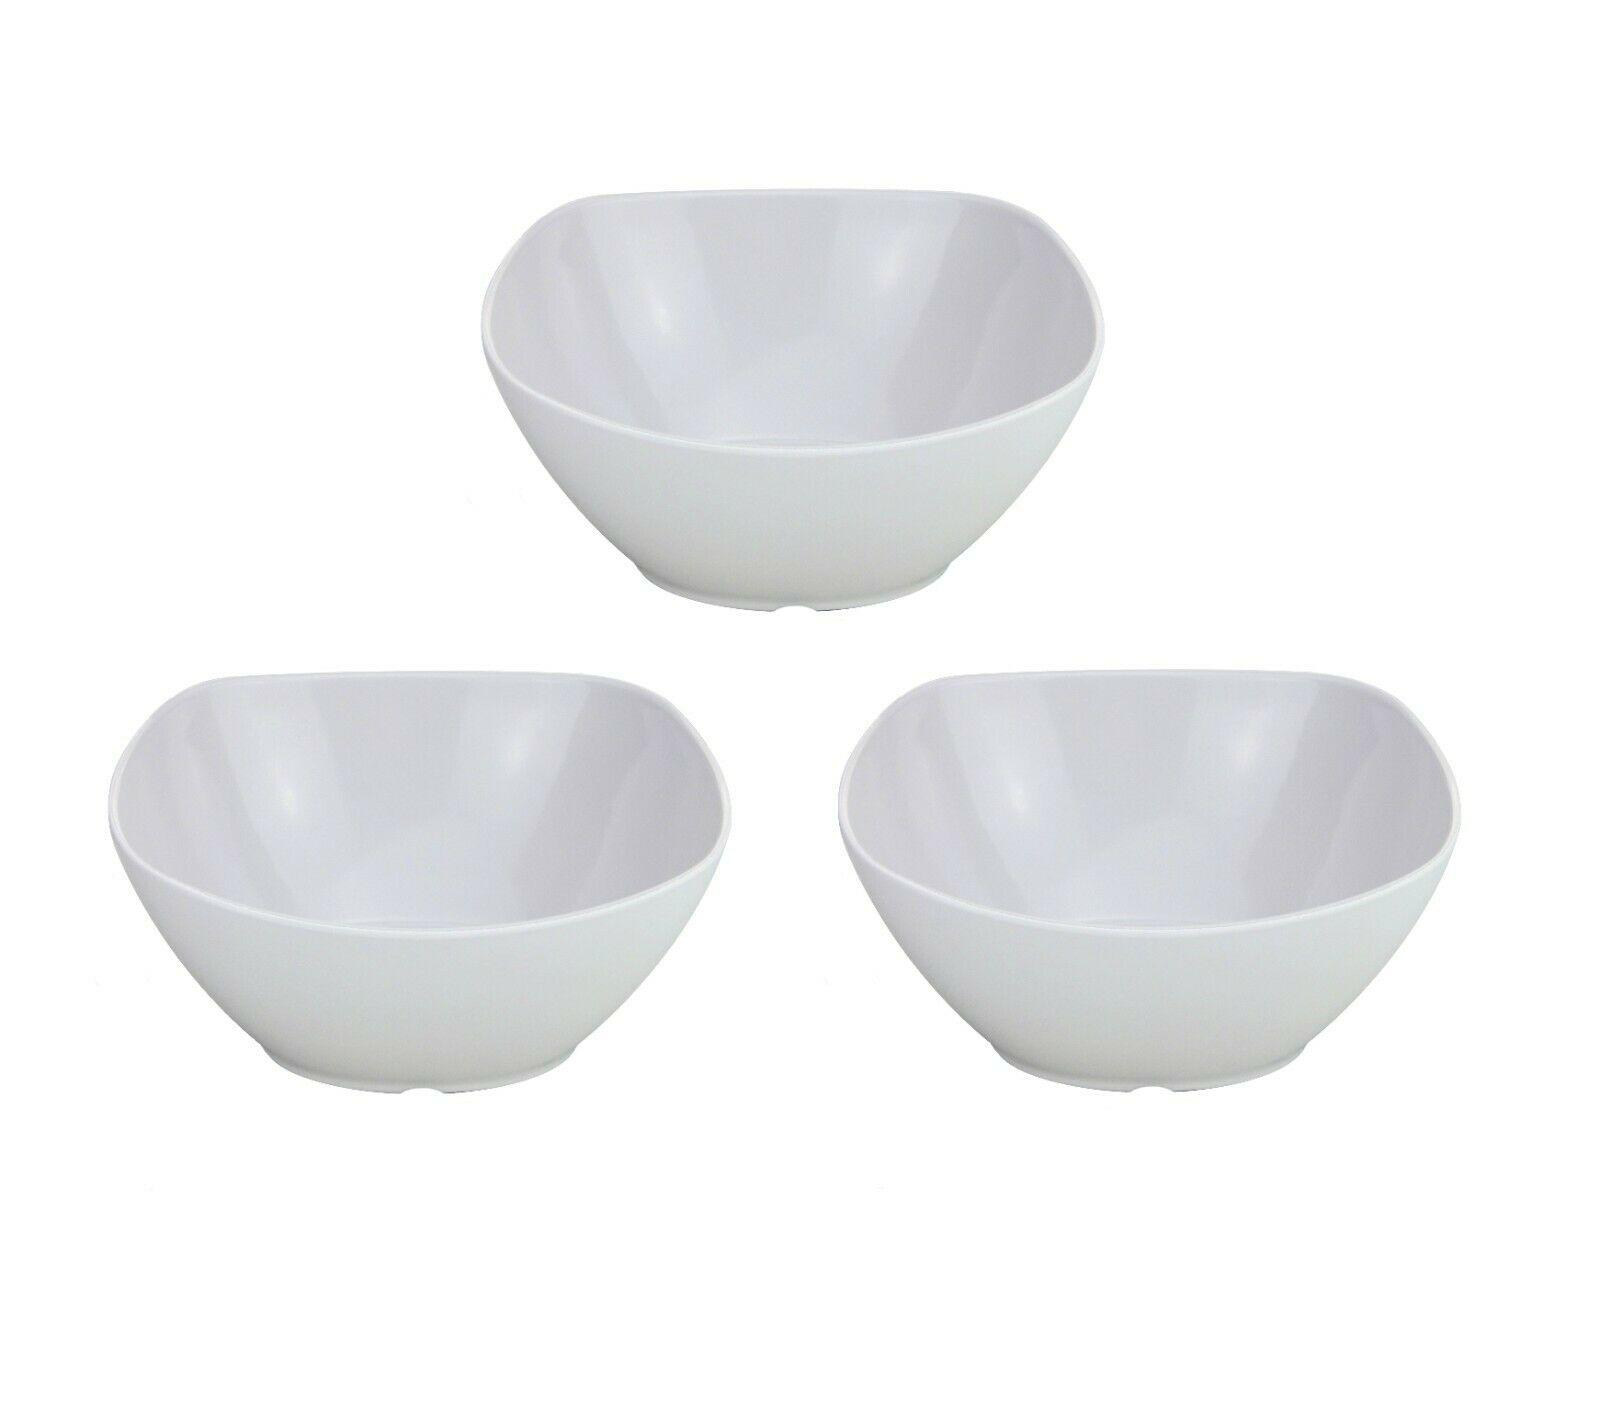 Details about   Handicraft Ceramic Serving bowls Set of 3 Mixing Bowls Fruit Bowls Salad Bowls 